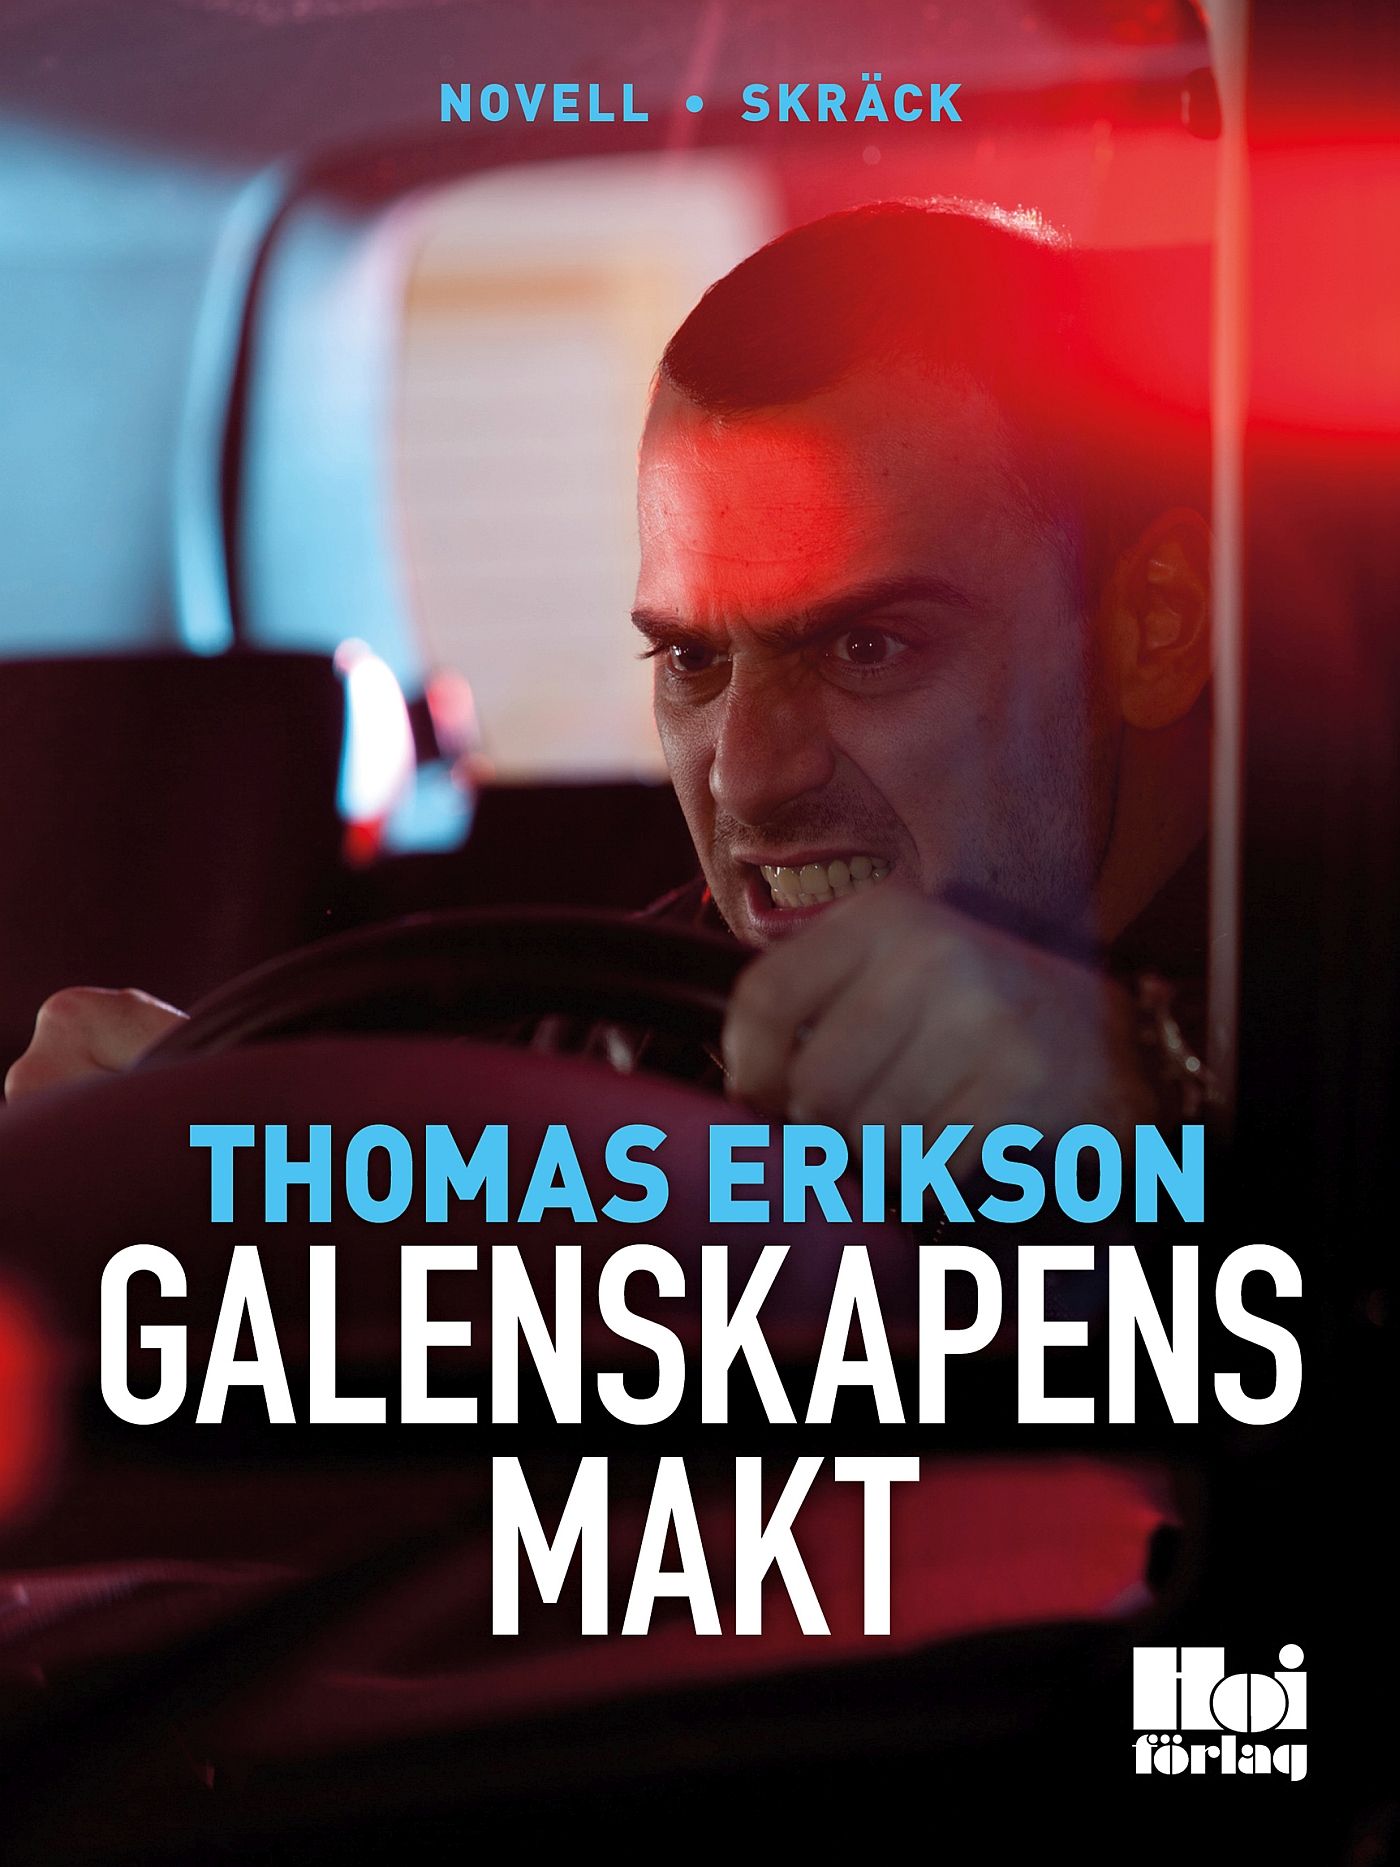 Galenskapens makt, eBook by Thomas Erikson